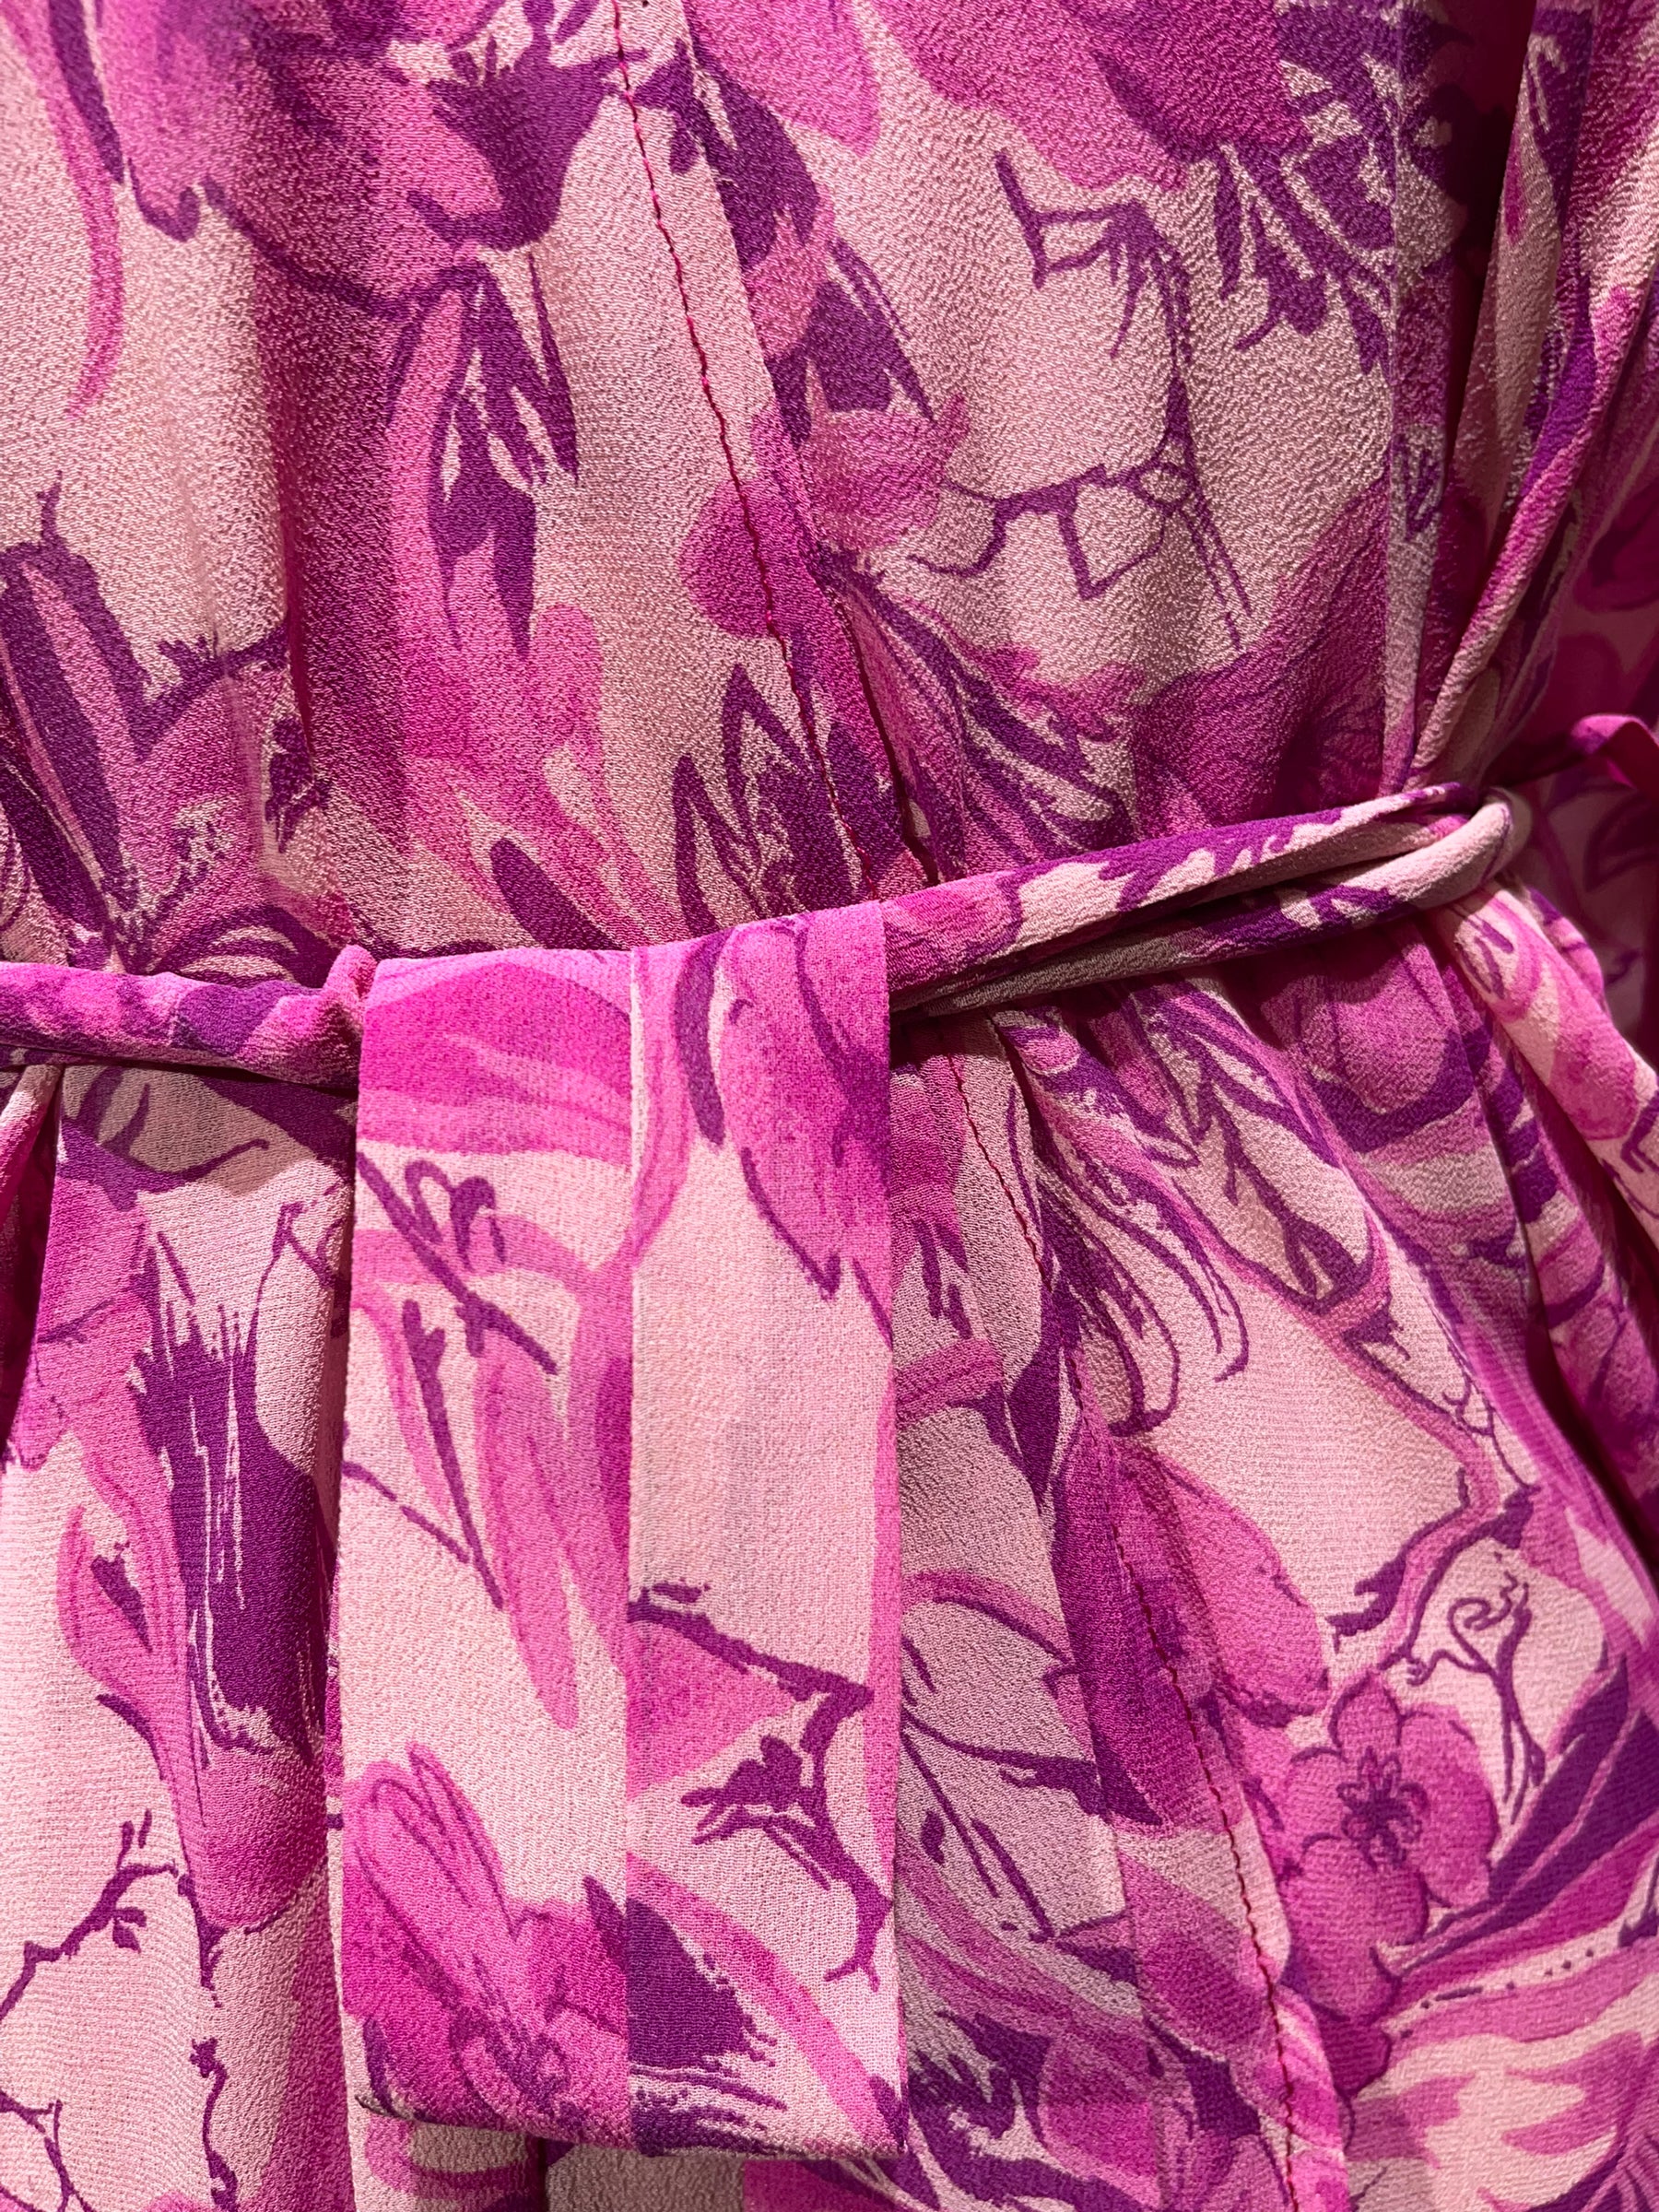 PRG4583 Sheer Wabi Sabi Pure Silk Kimono Sleeved Duster with Belt